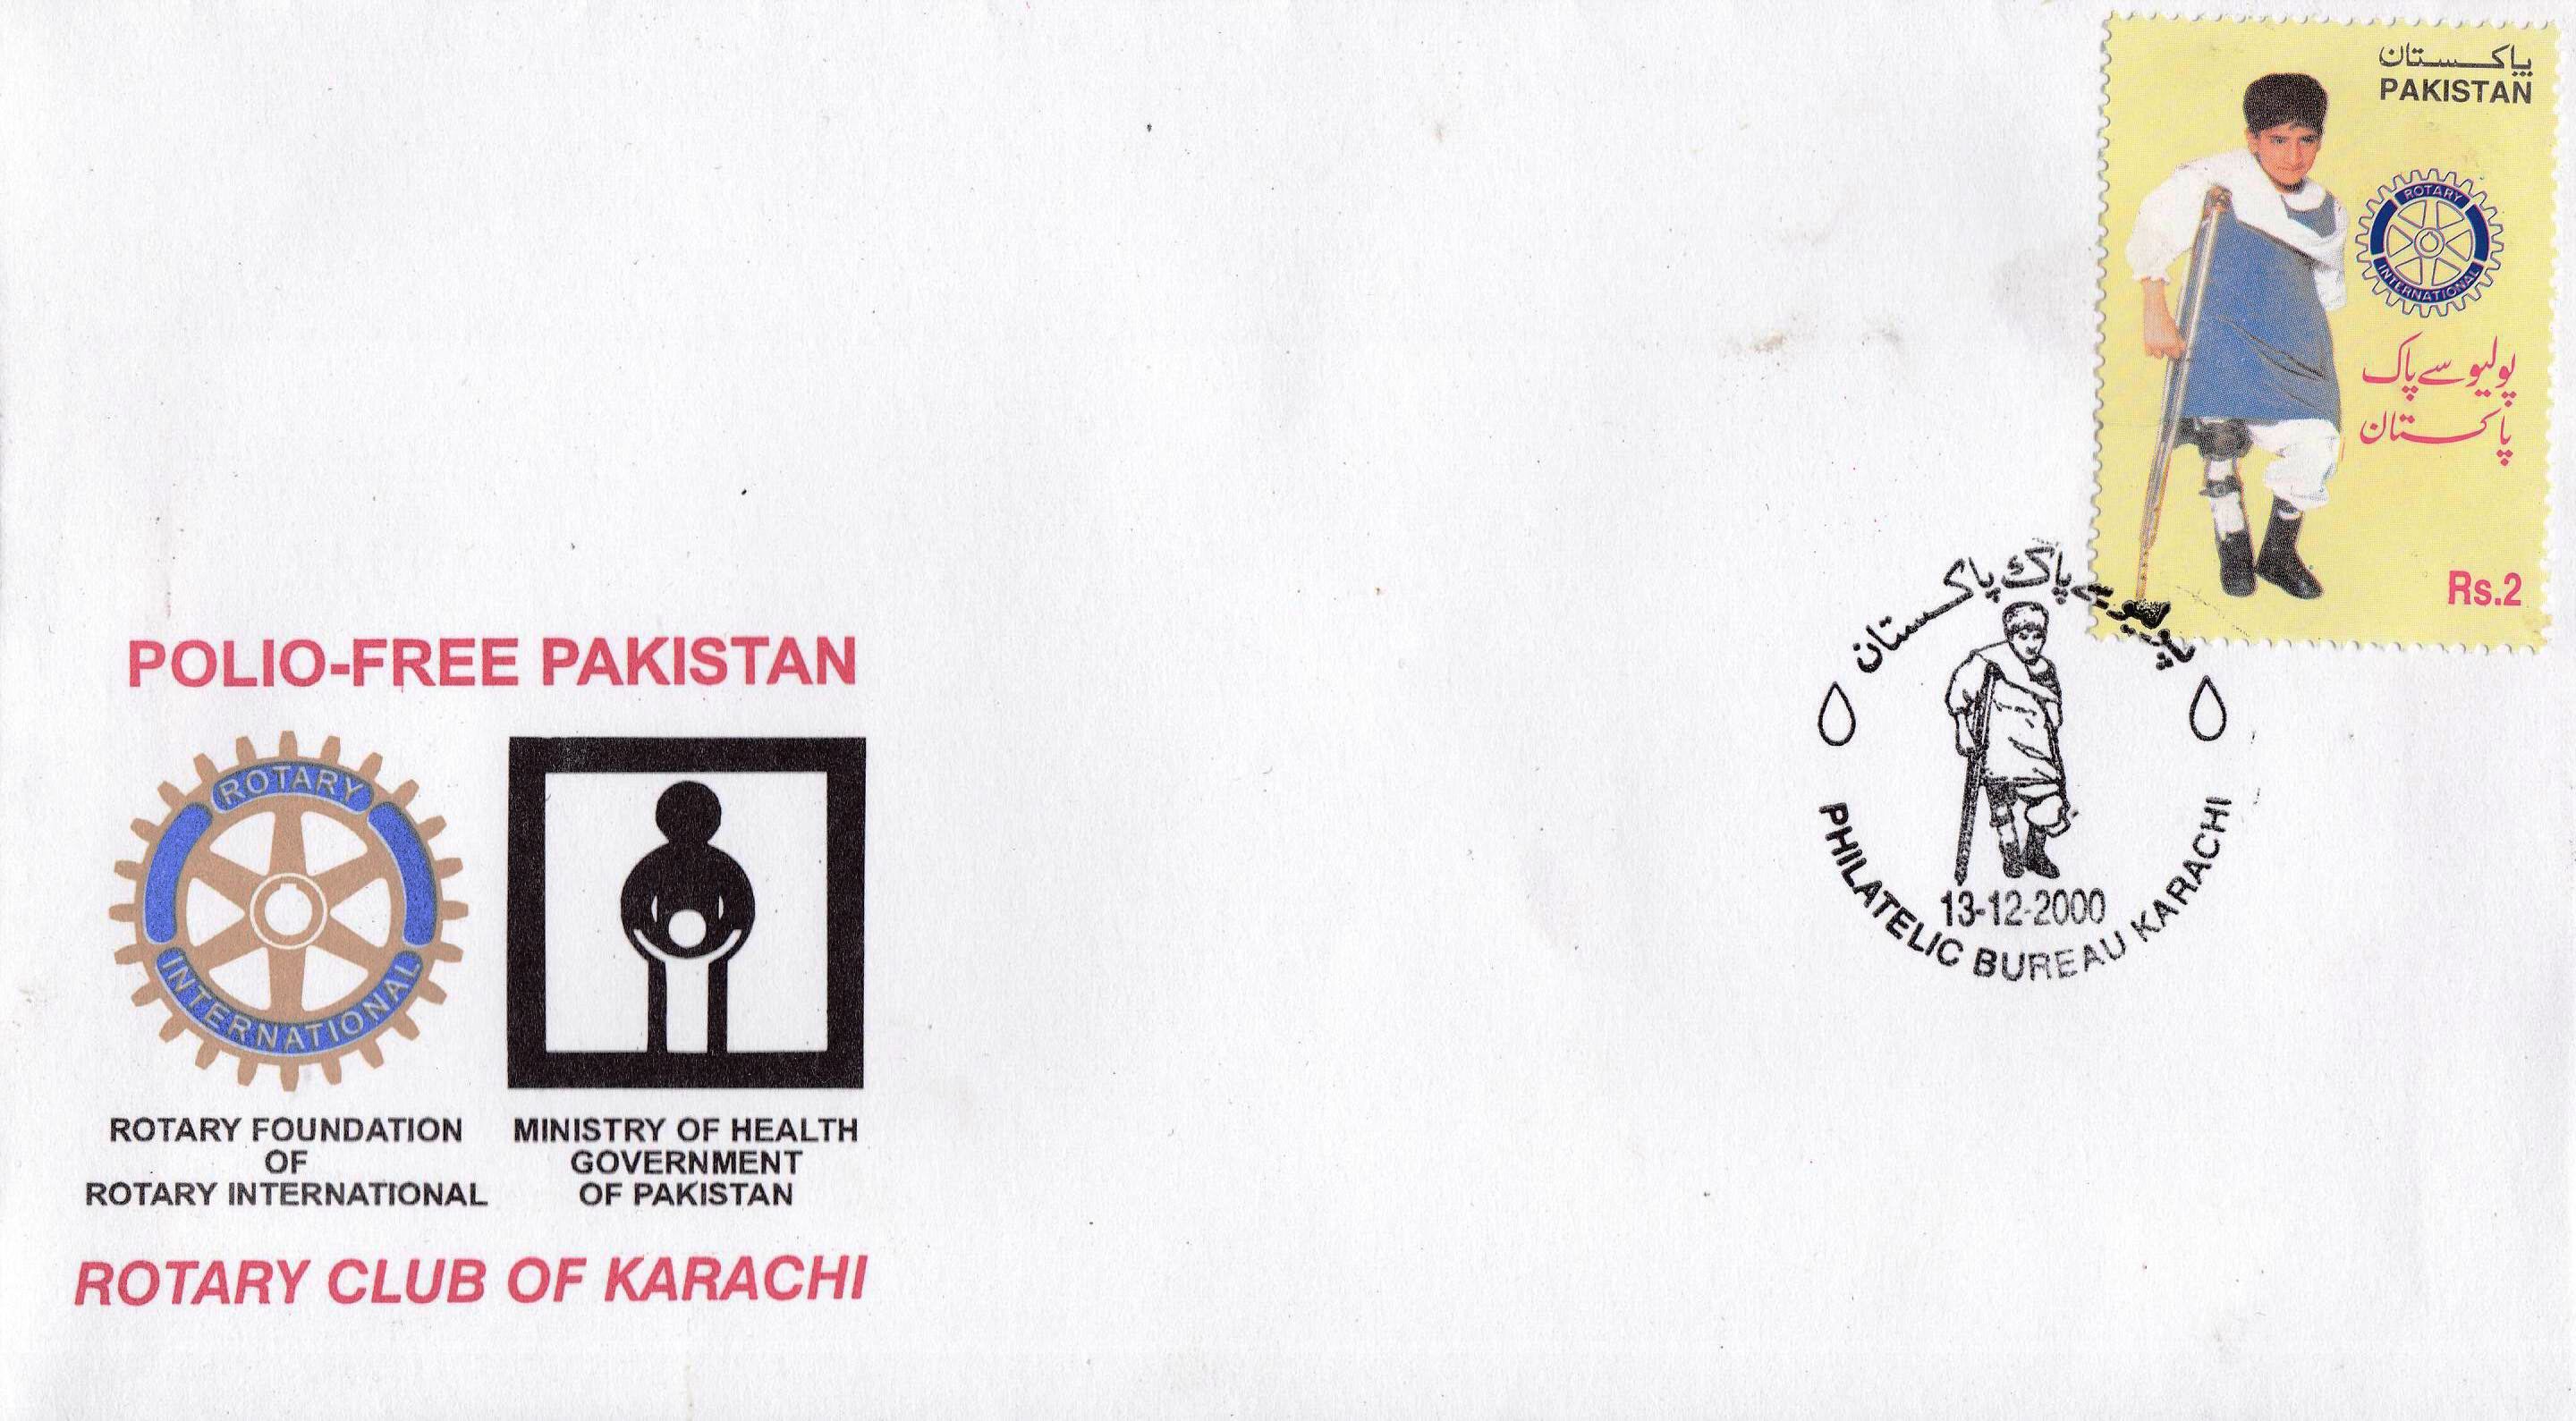 Pakistan Fdc 2000 World Without Polio Rotary International